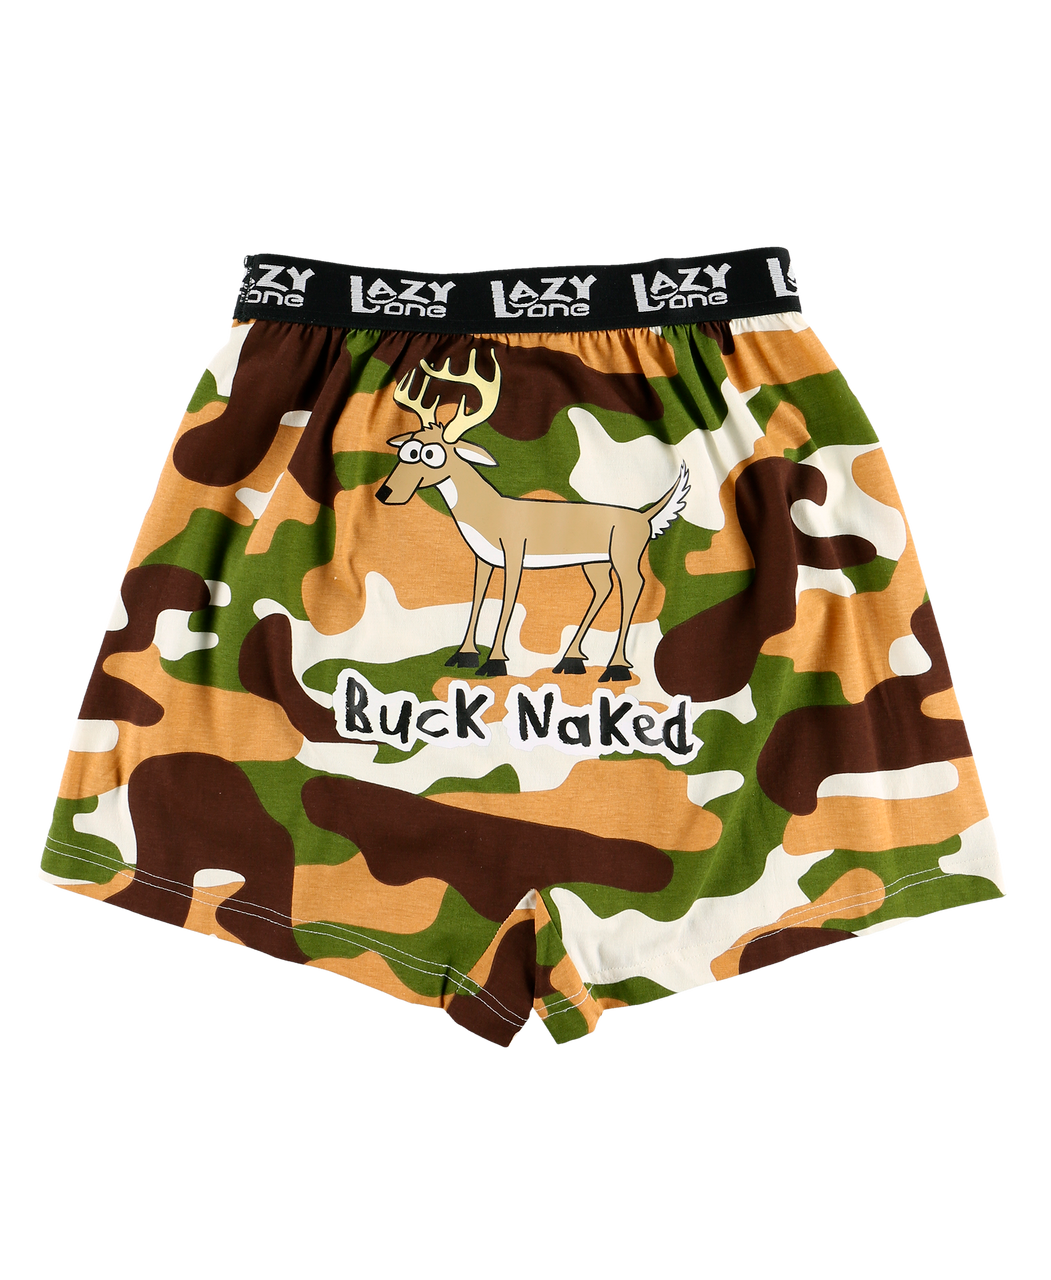 Buck Naked Camo Deer Men&#39;s Funny Boxer